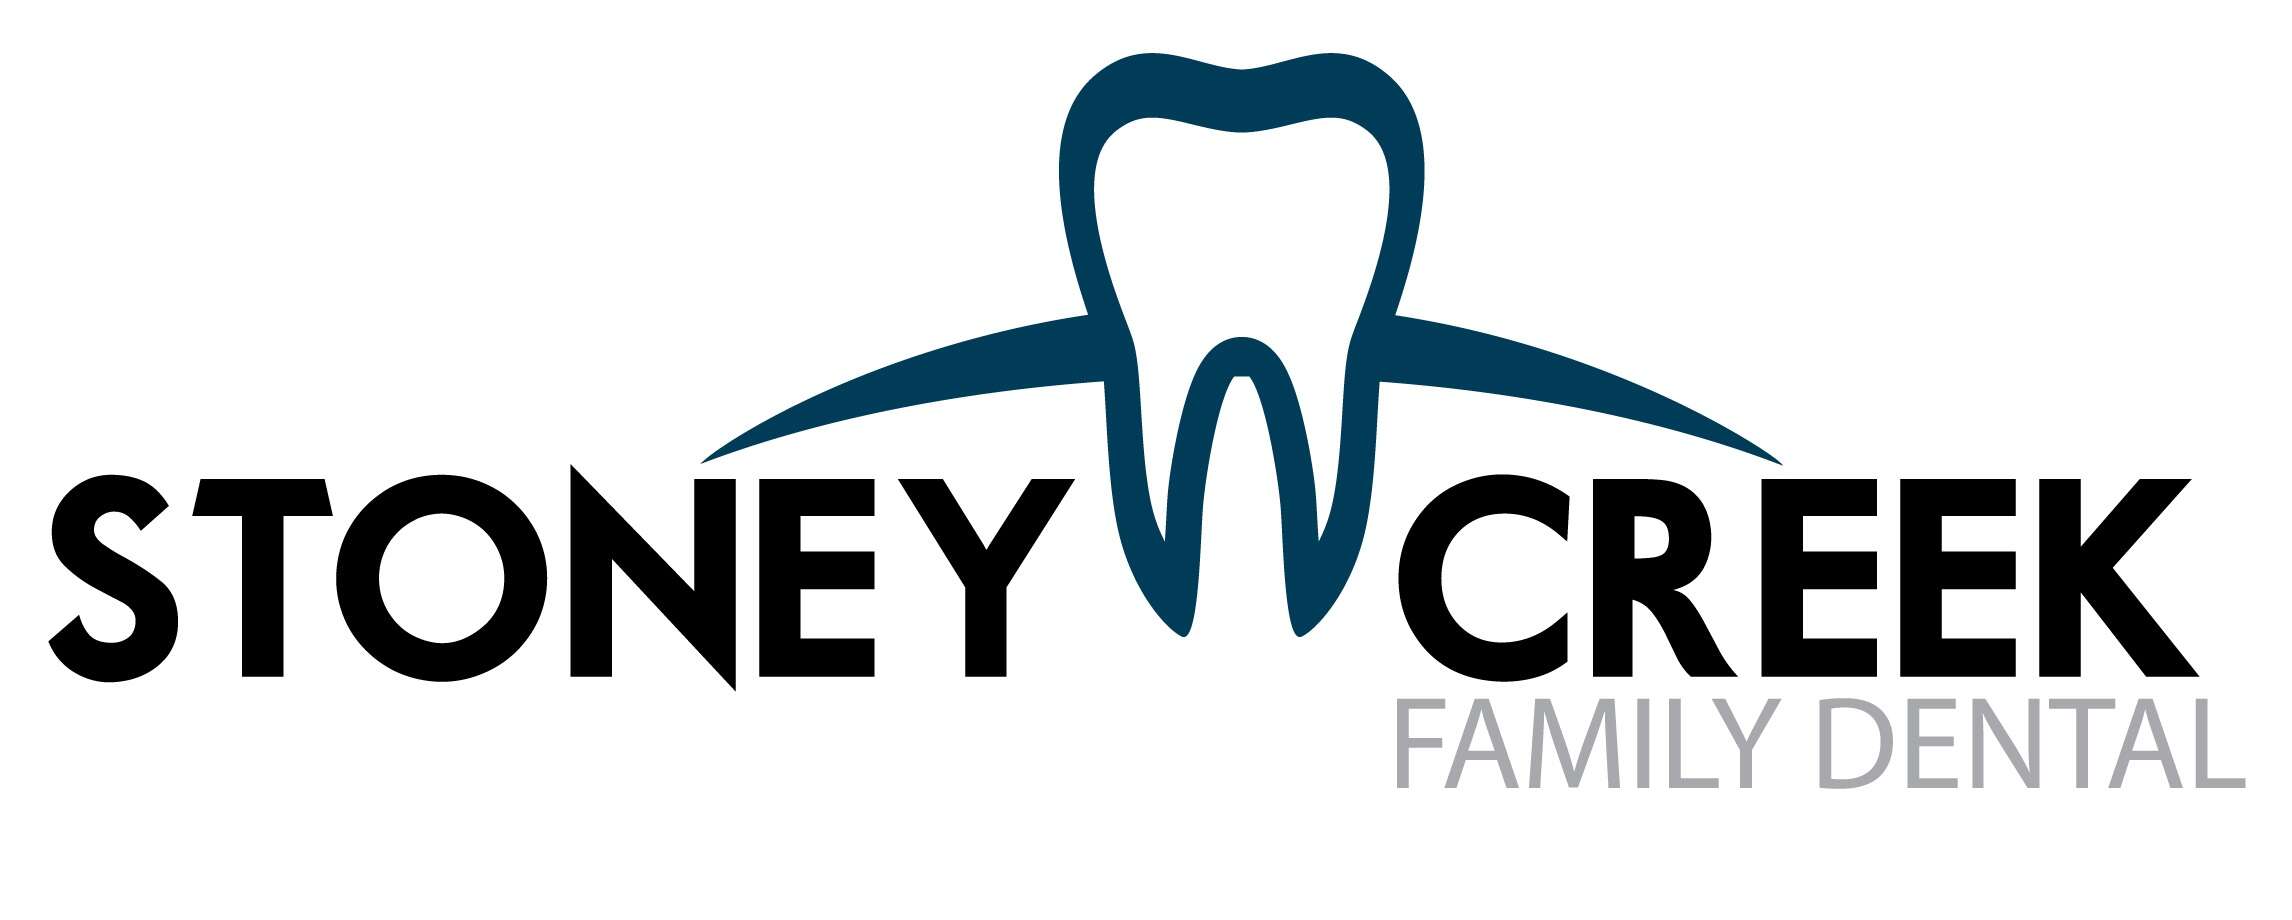 Stoney Creek Family Dental